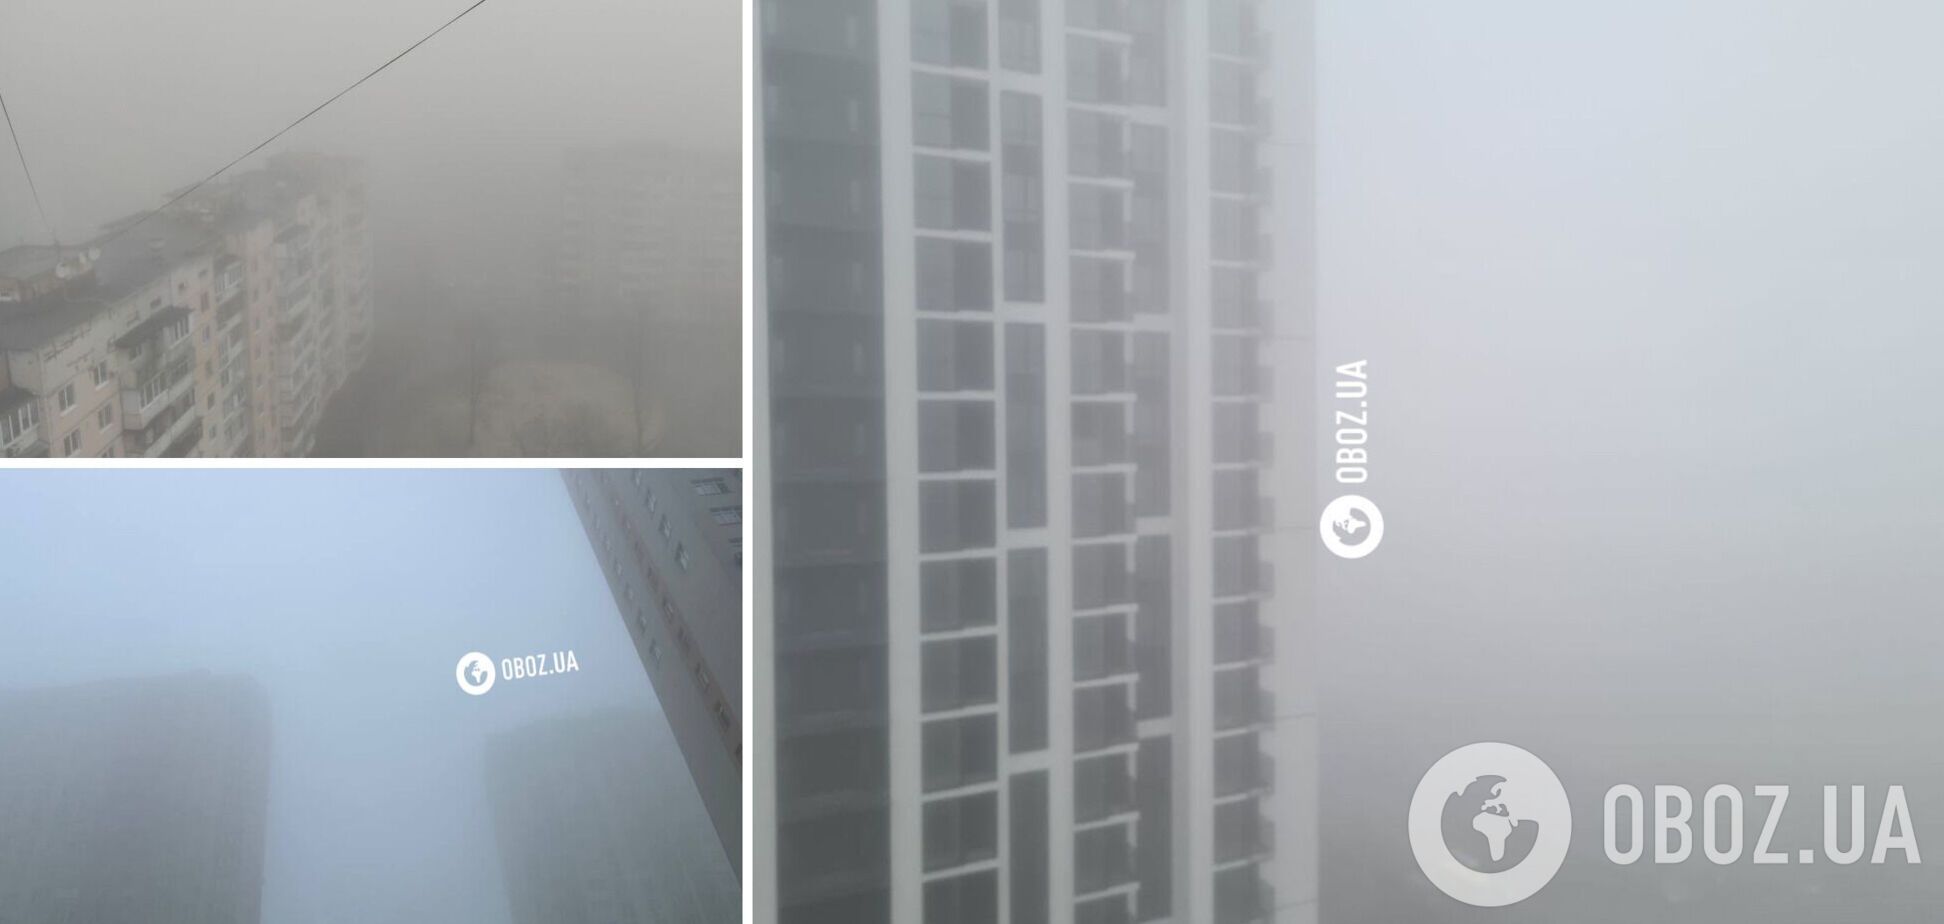 Киев накрыл густой туман